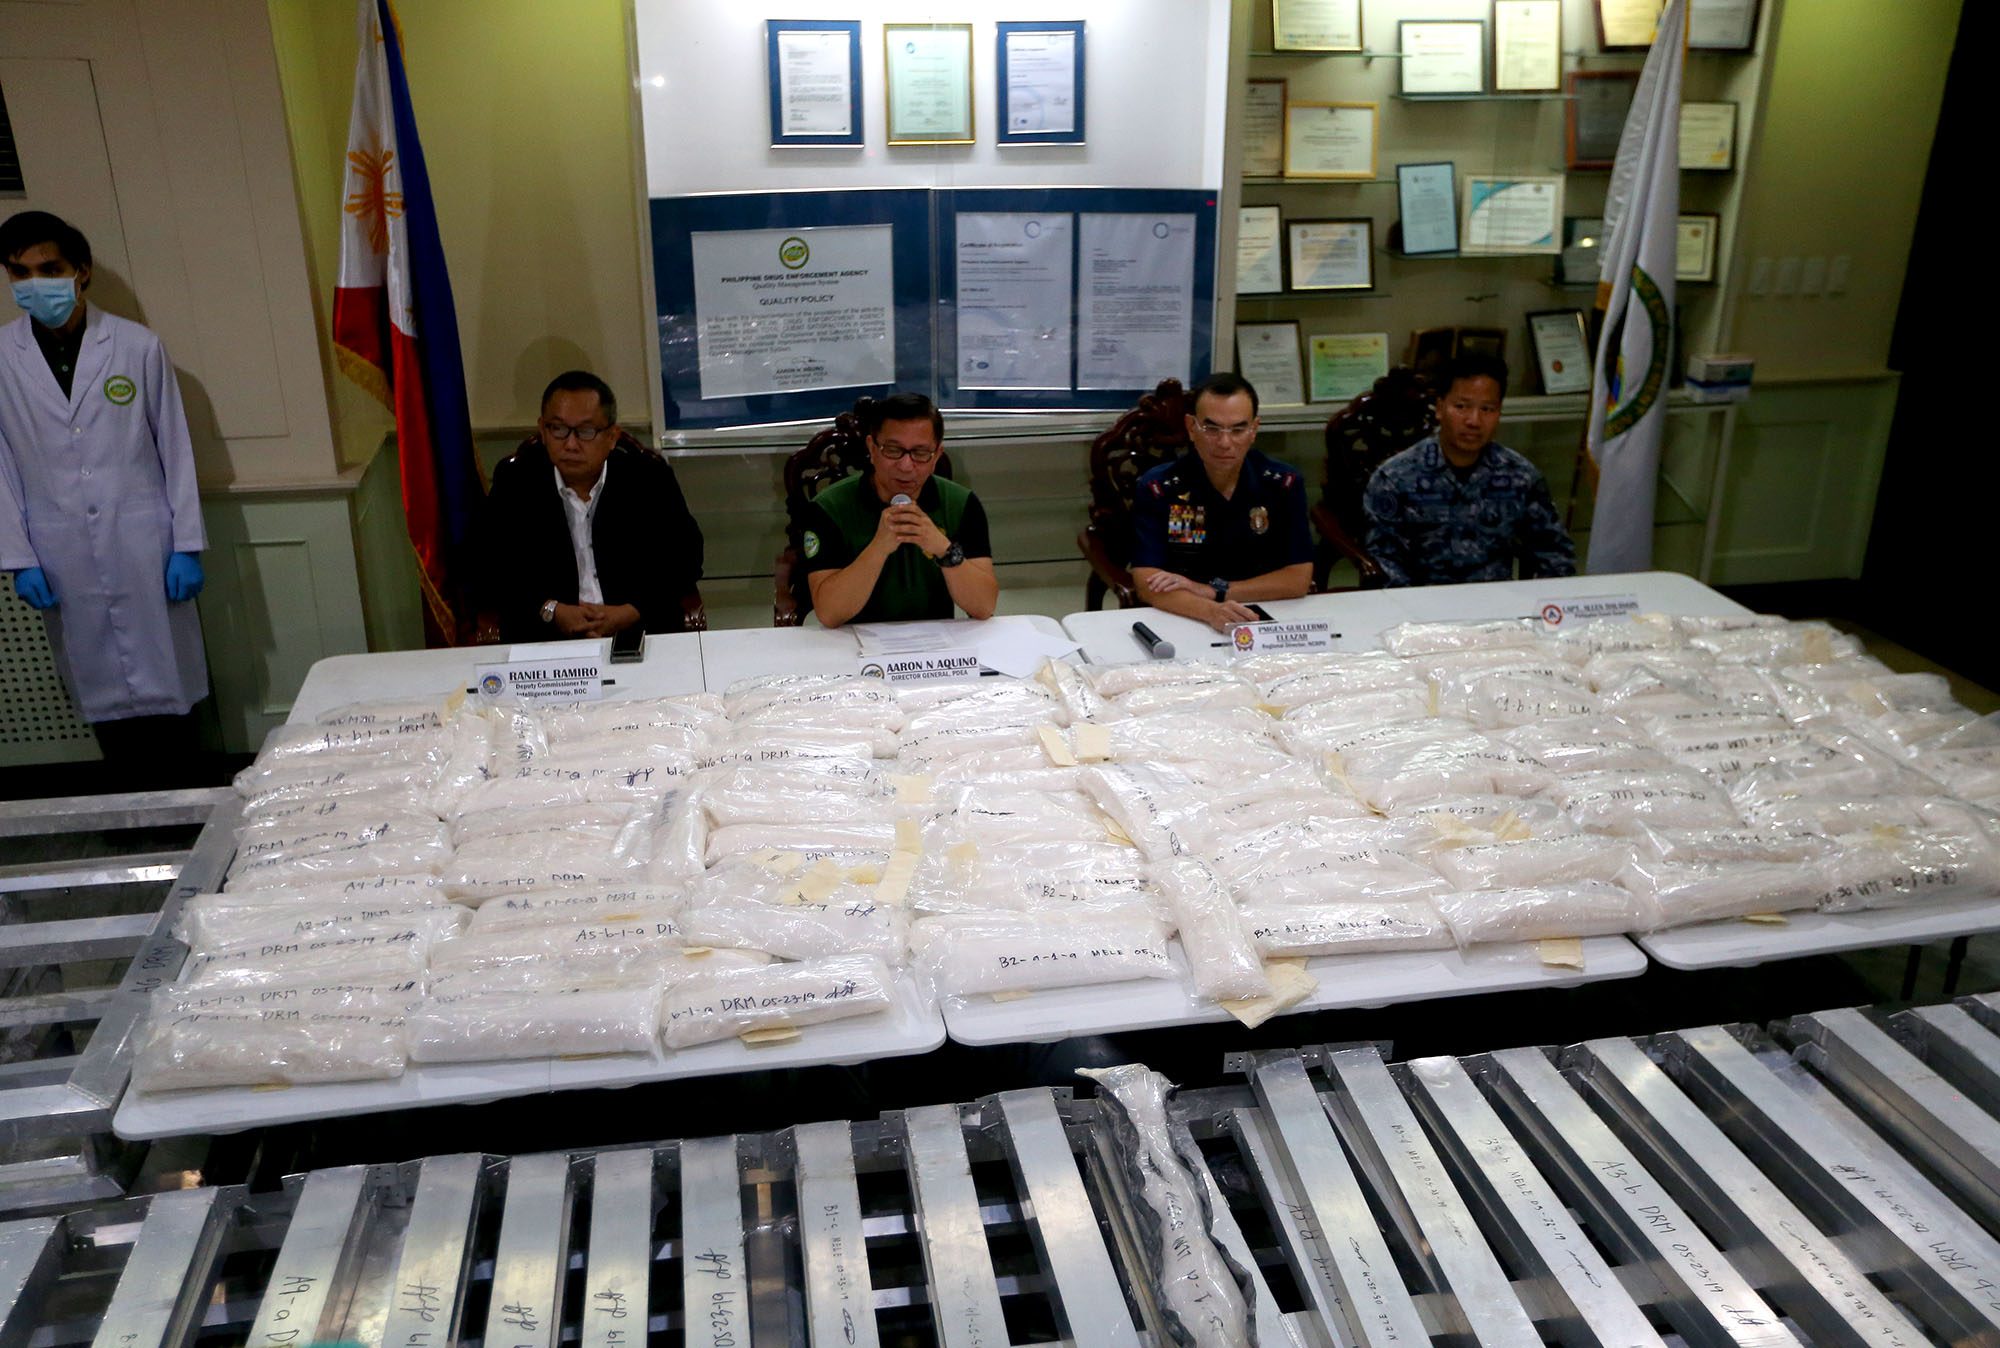 P1 billion worth of shabu seized in Malabon warehouse